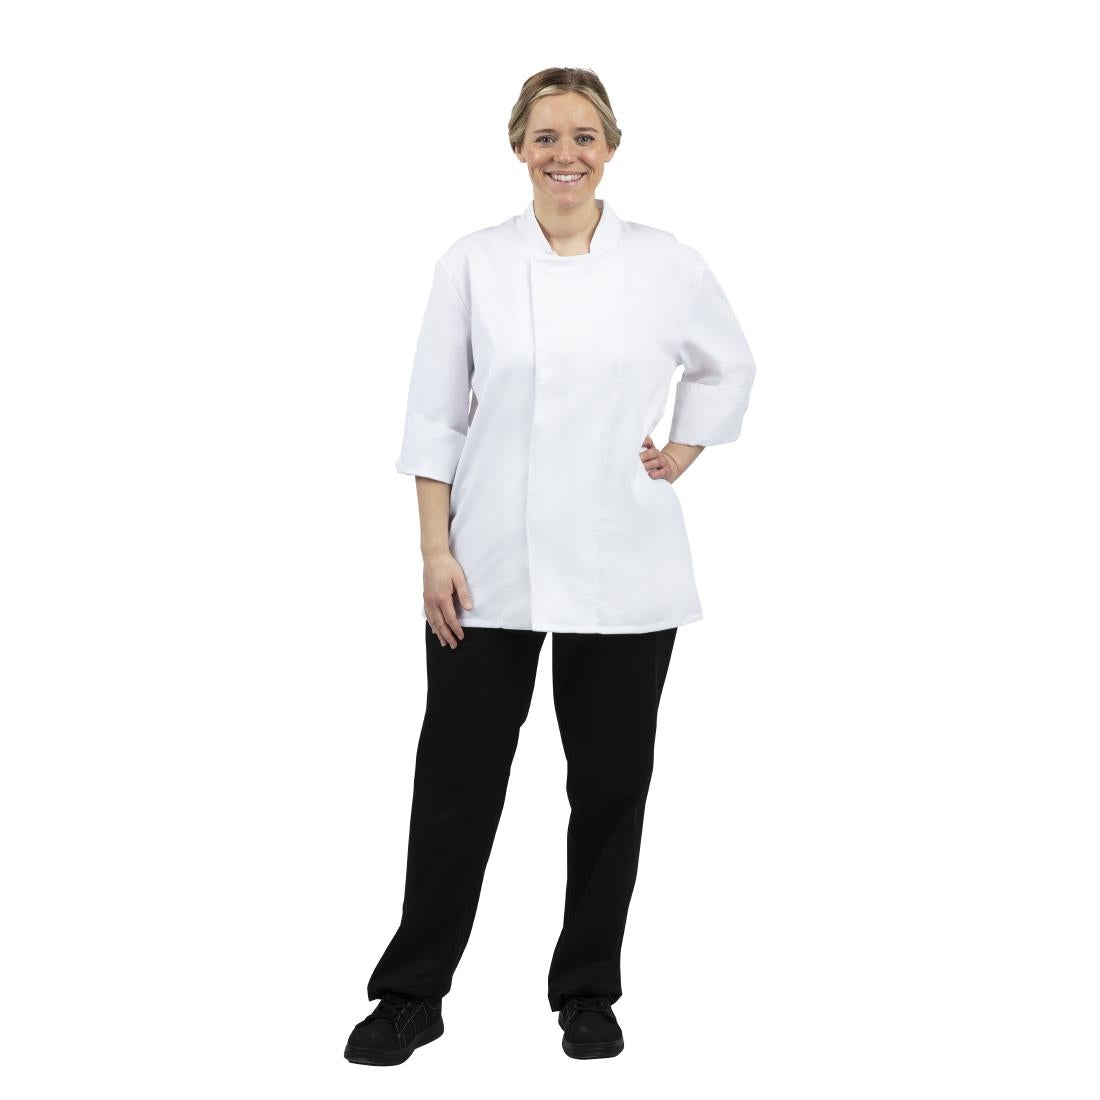 BB578-XL Whites Unisex Atlanta Chef Jacket White Teflon Size XL JD Catering Equipment Solutions Ltd